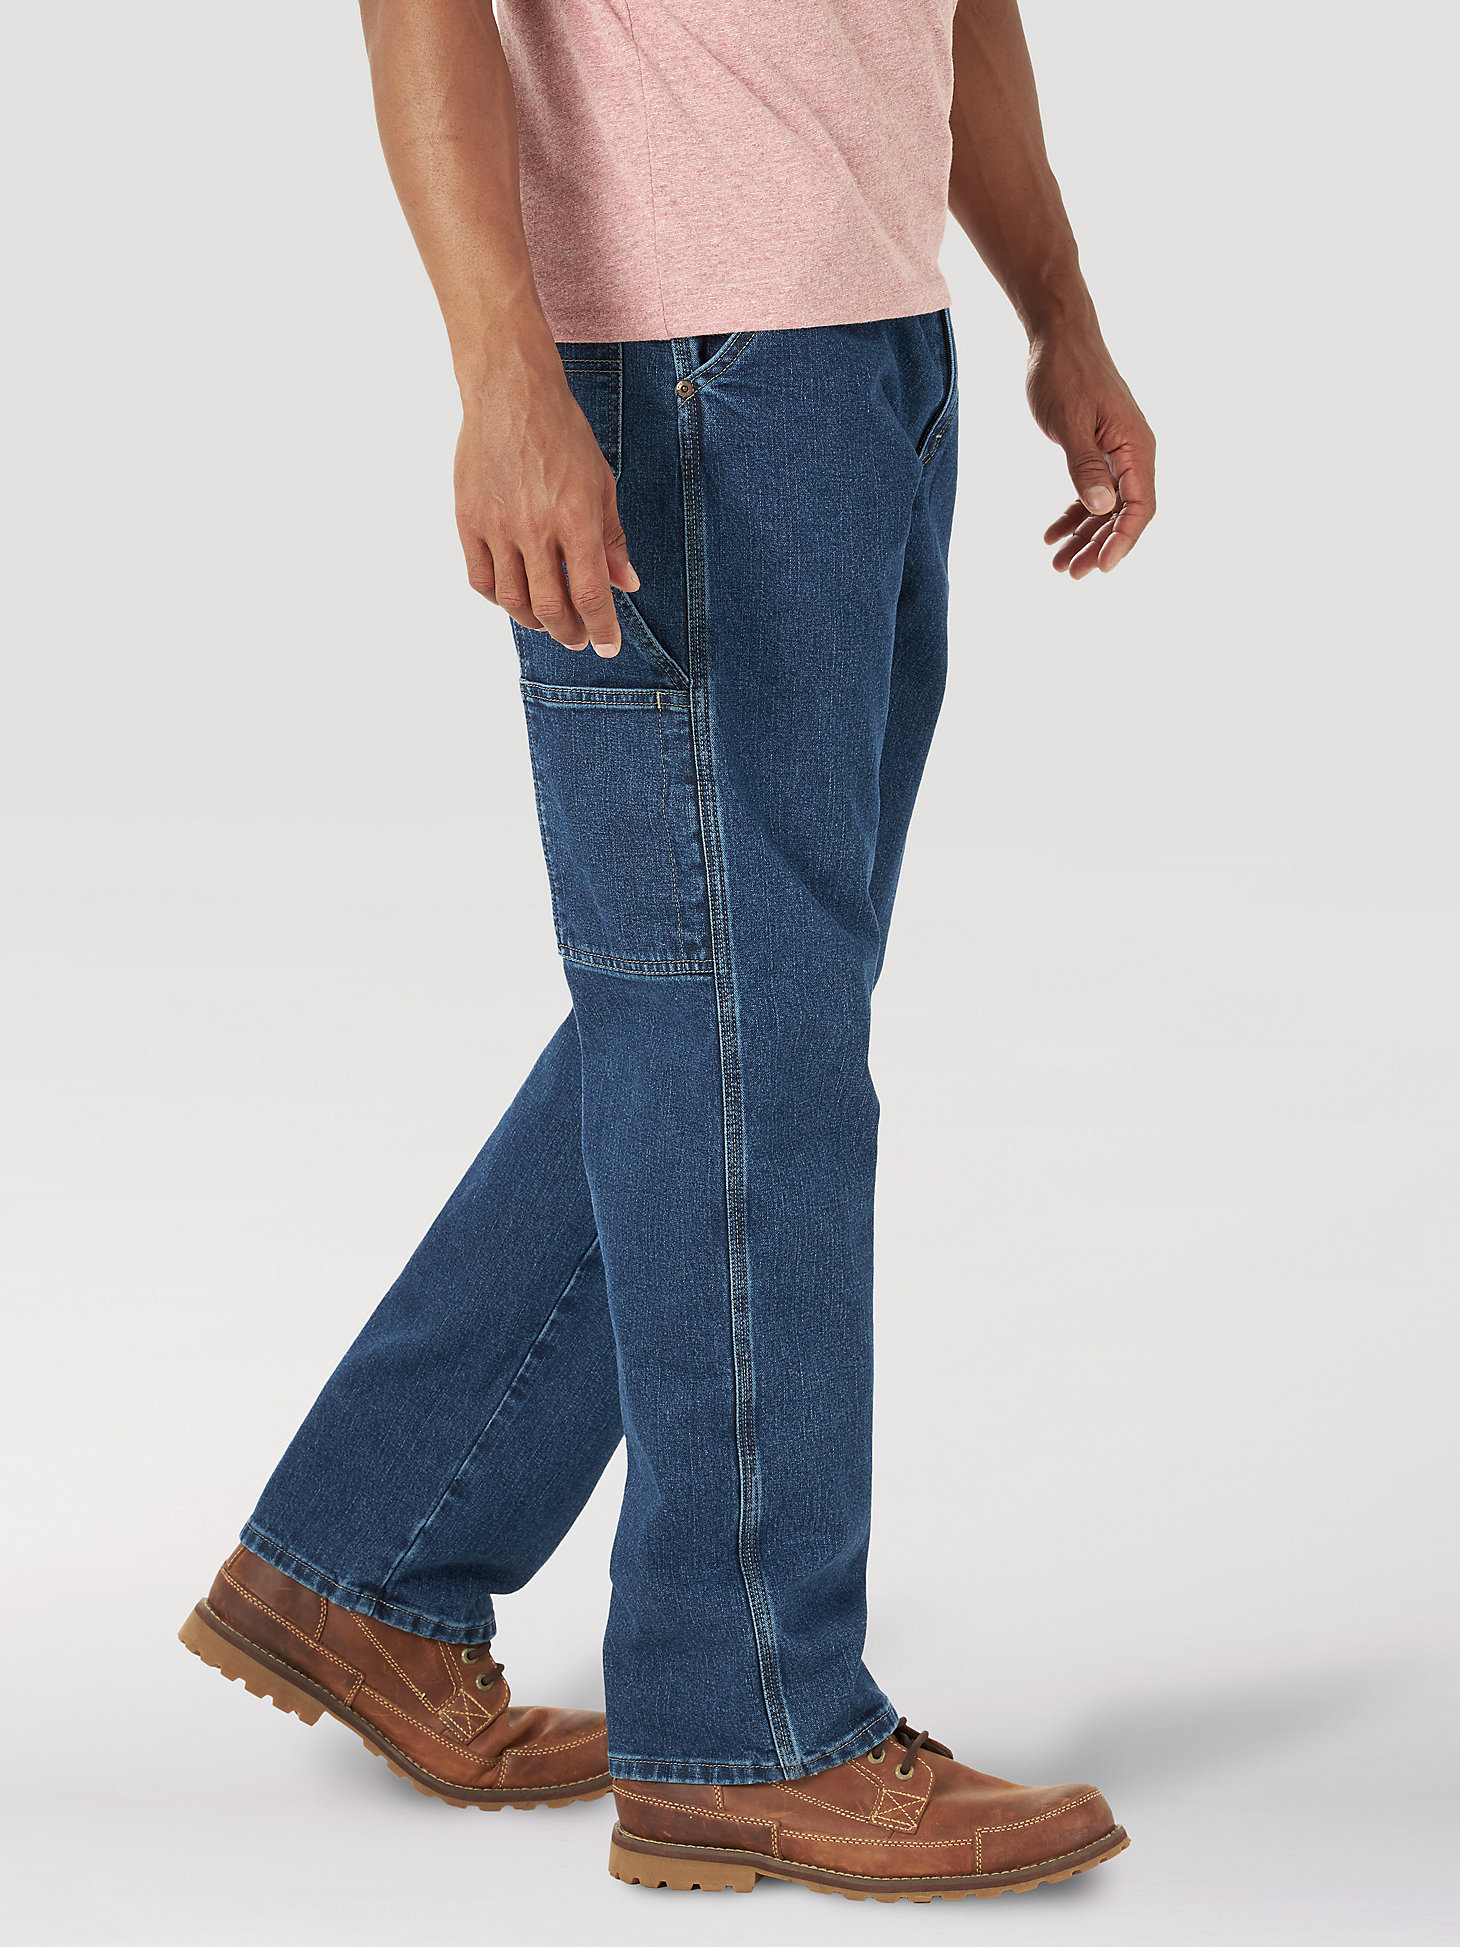 discount 94% ZY jeans Navy Blue 11Y KIDS FASHION Trousers Jean 